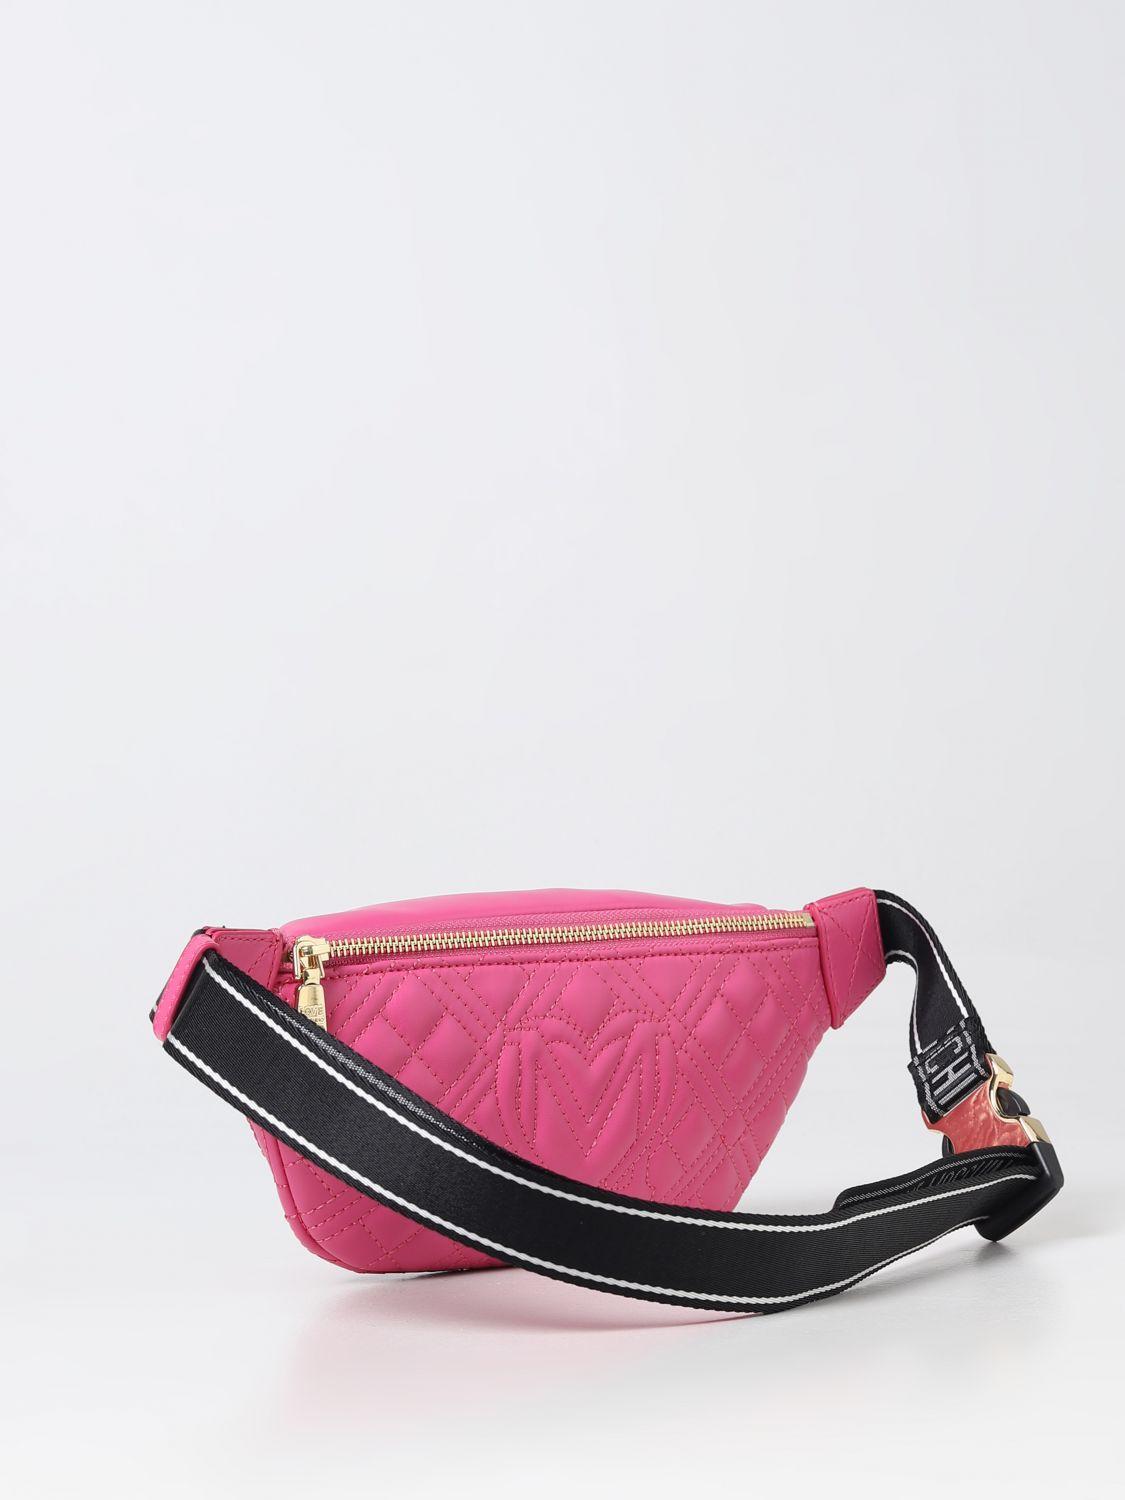 Love Moschino Belt Bag in Pink